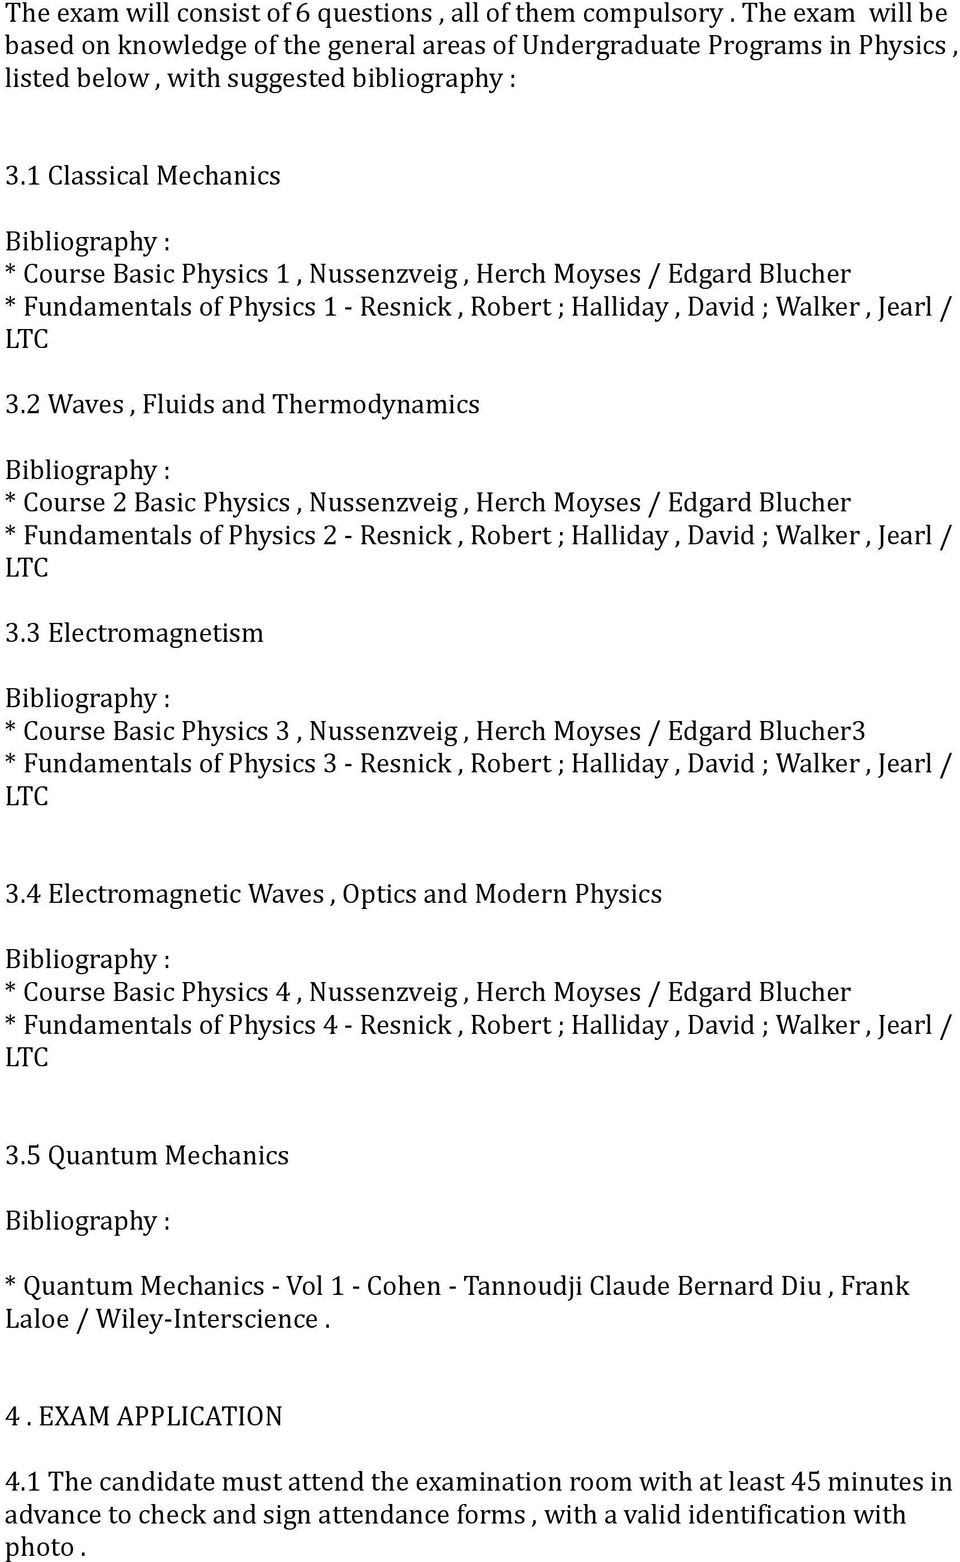 1 Classical Mechanics * Course Basic Physics 1, Nussenzveig, Herch Moyses / Edgard Blucher * Fundamentals of Physics 1 - Resnick, Robert ; Halliday, David ; Walker, Jearl / 3.